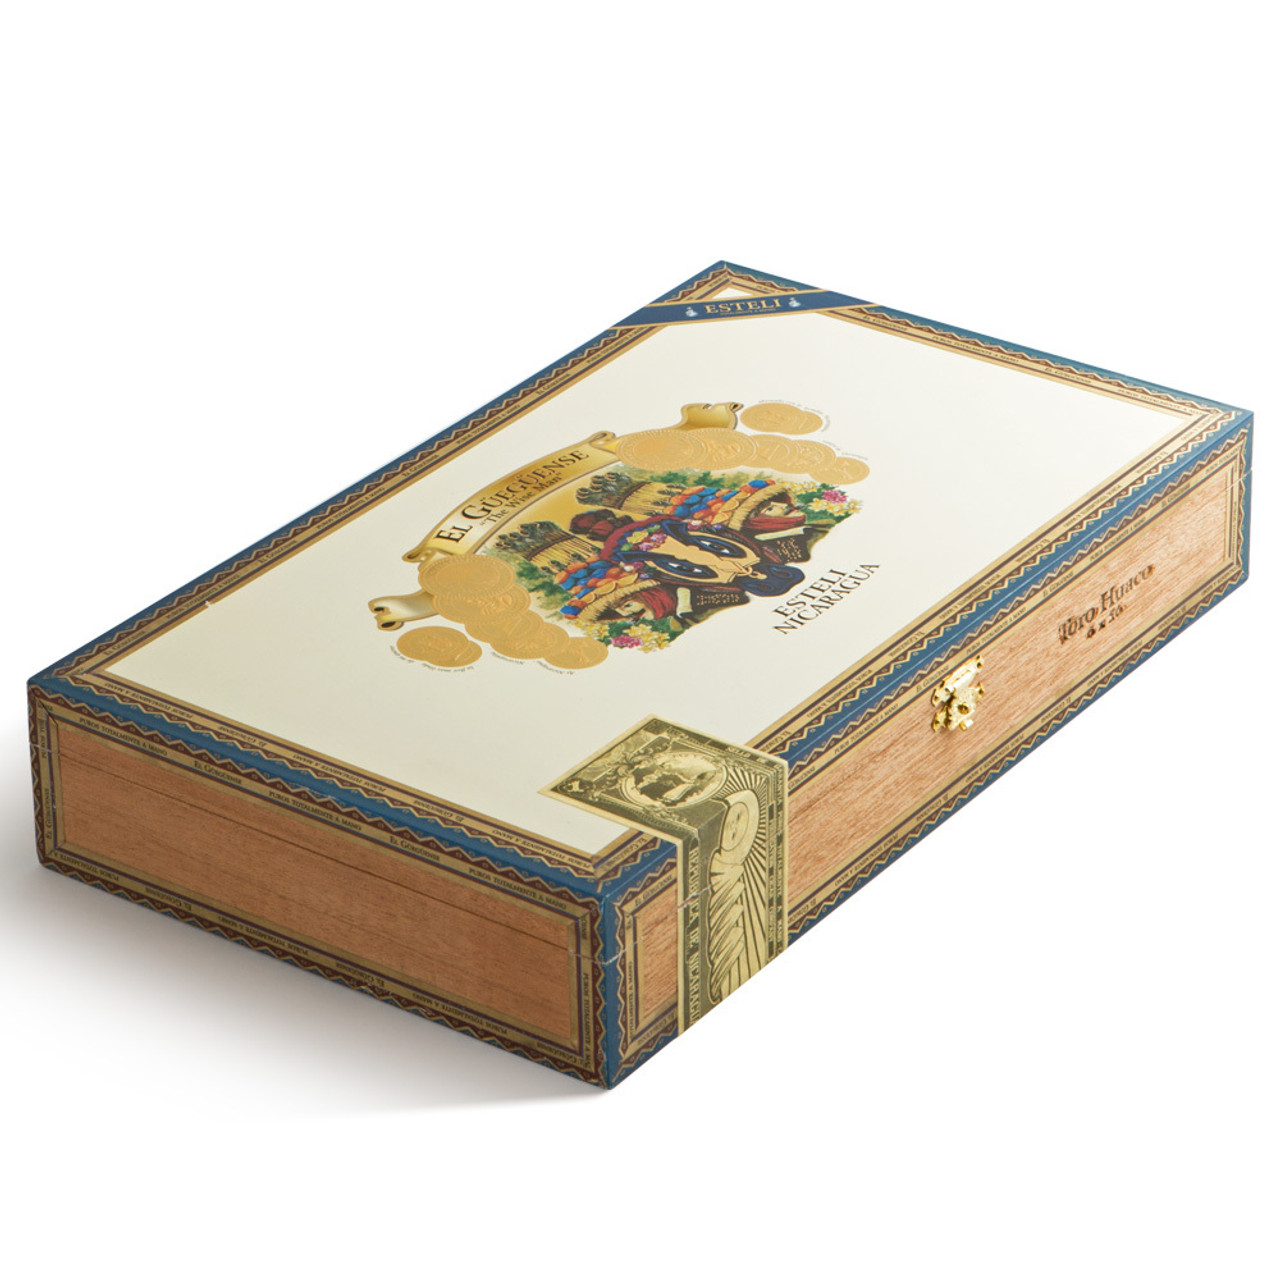 Foundation El Gueguense Lancero Cigars - 7 x 40 (Box of 13) *Box